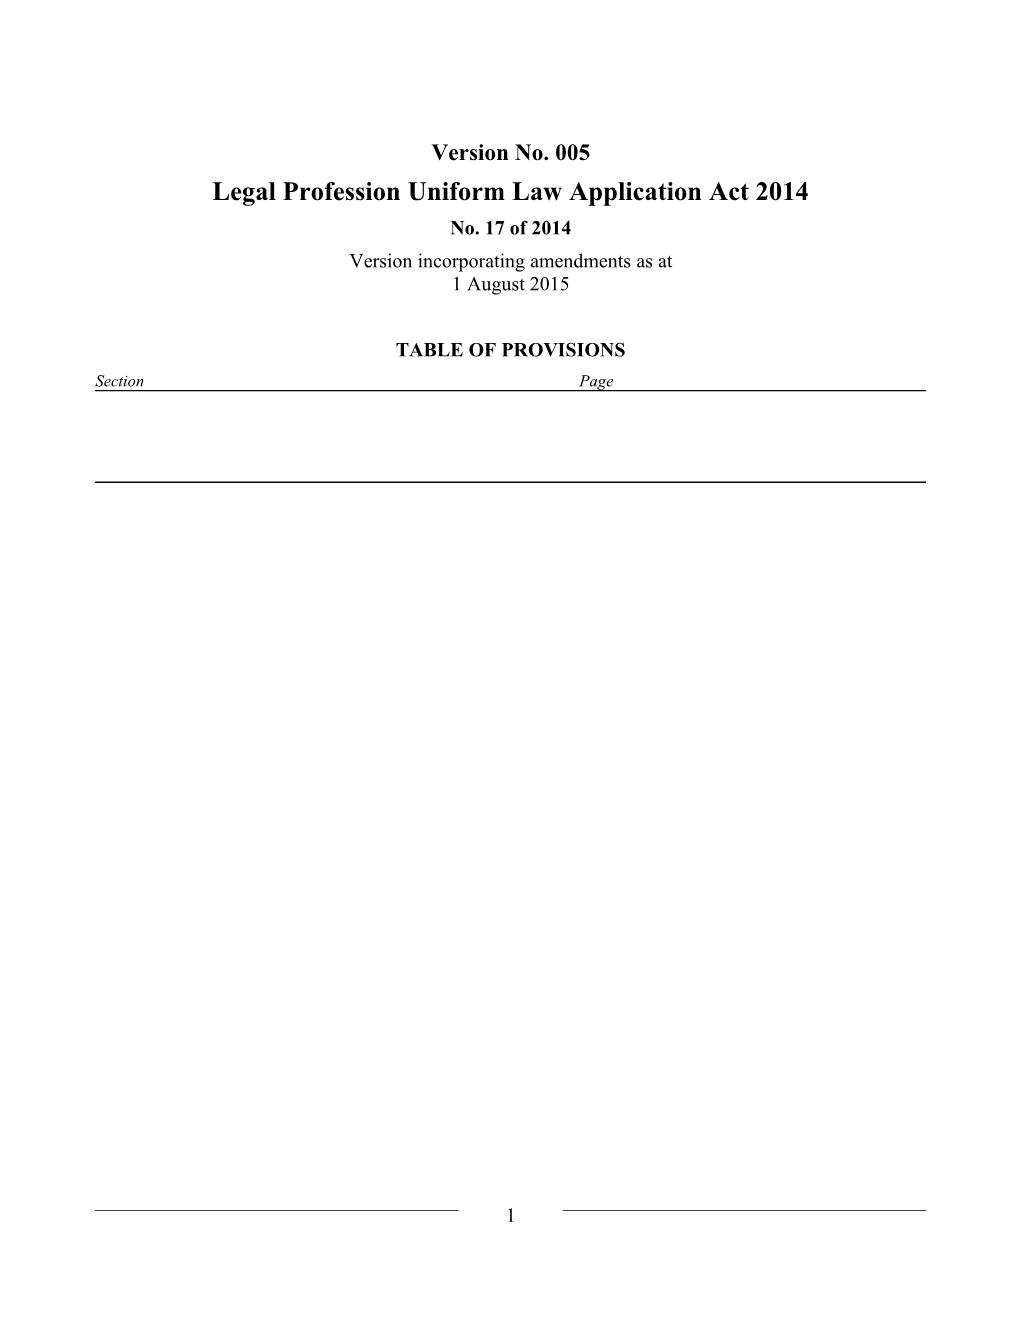 Legal Profession Uniform Law Application Act 2014